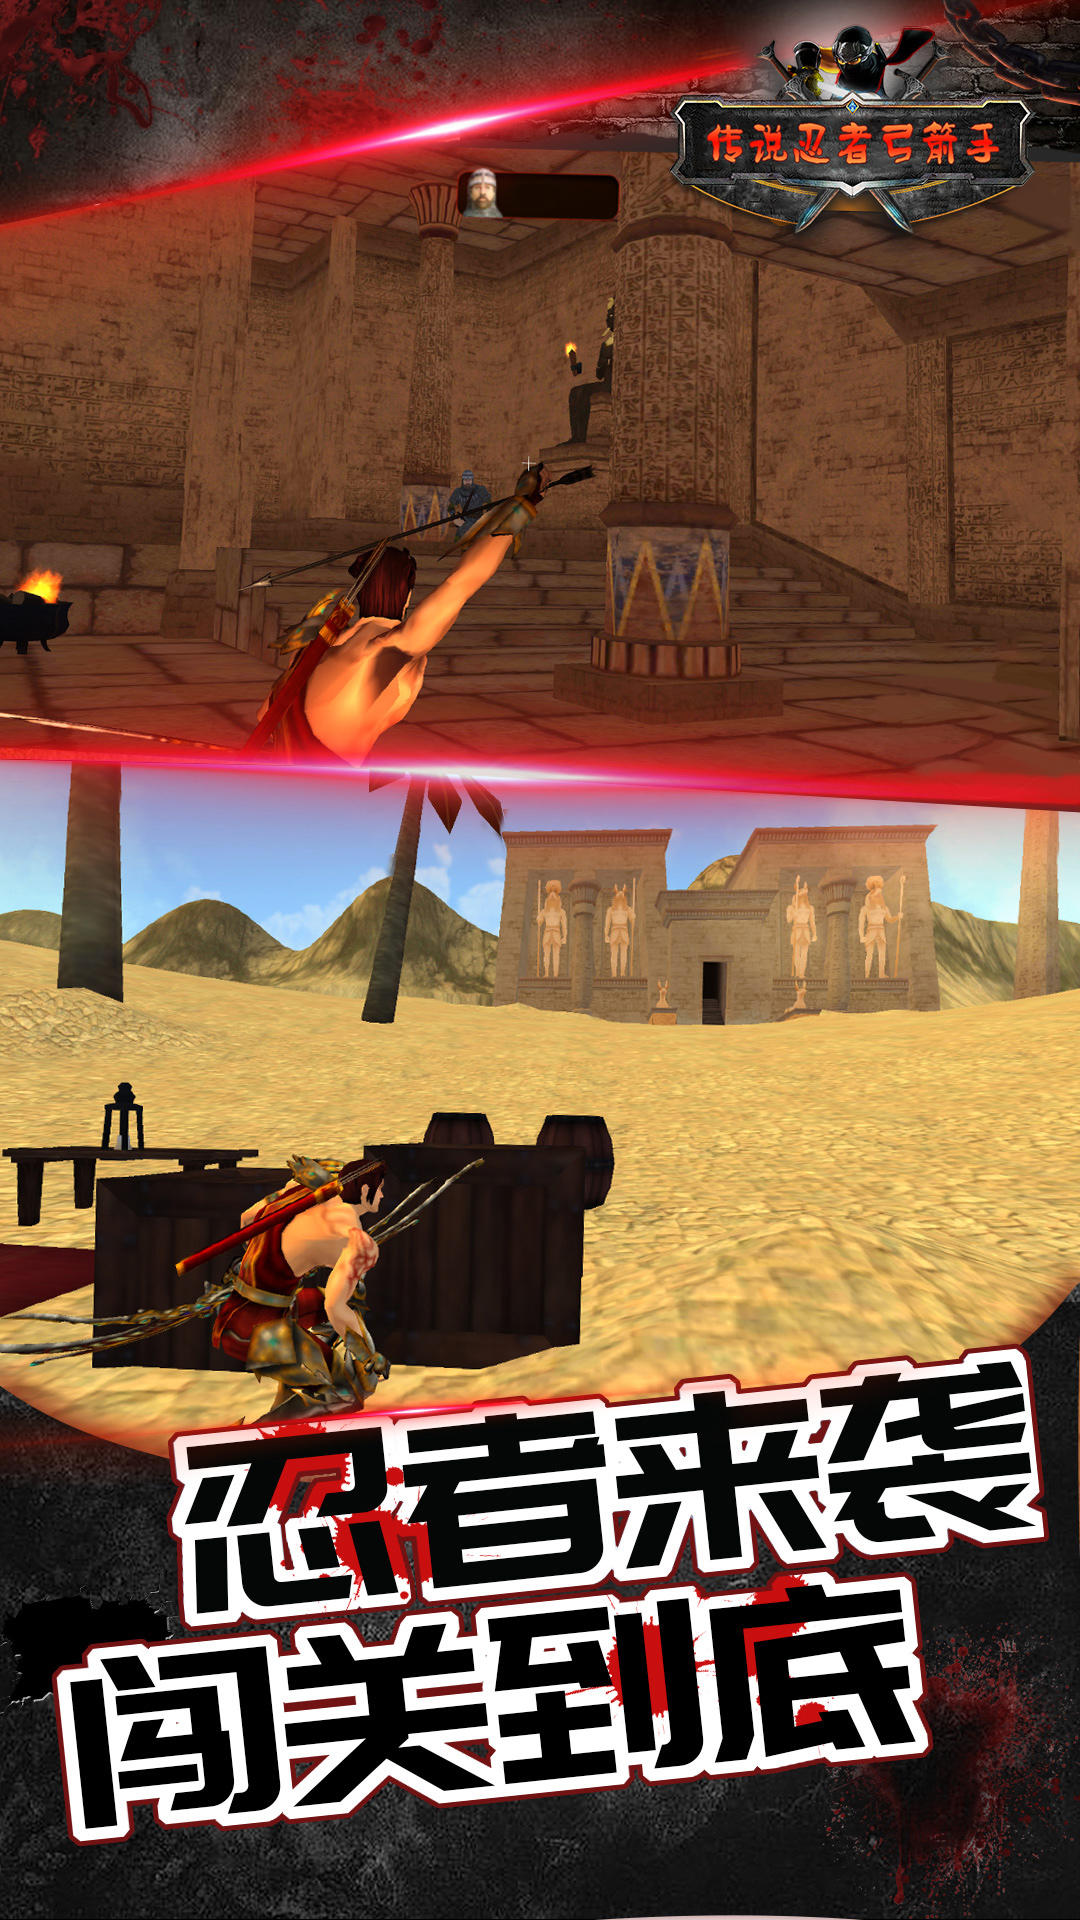 Screenshot 1 of Legenda Ninja Archer 1.0.0